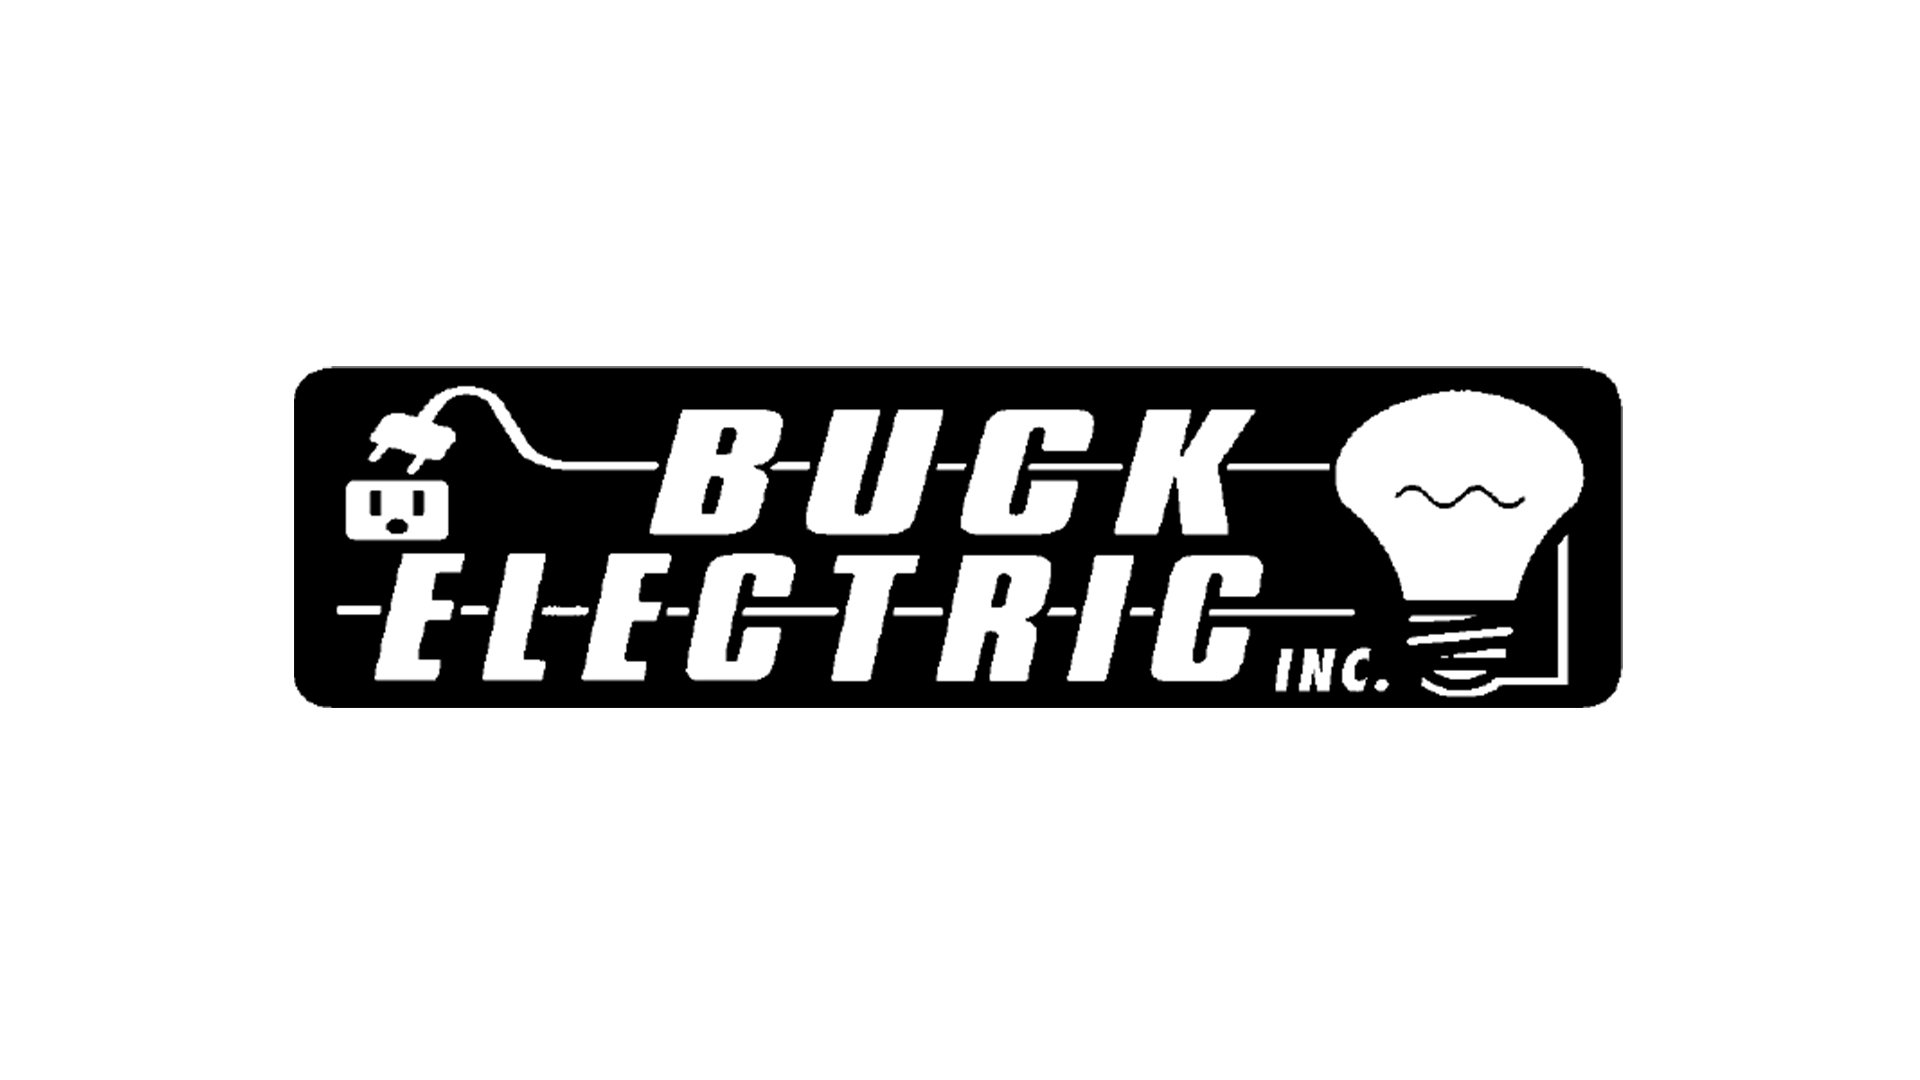 Buck Electric